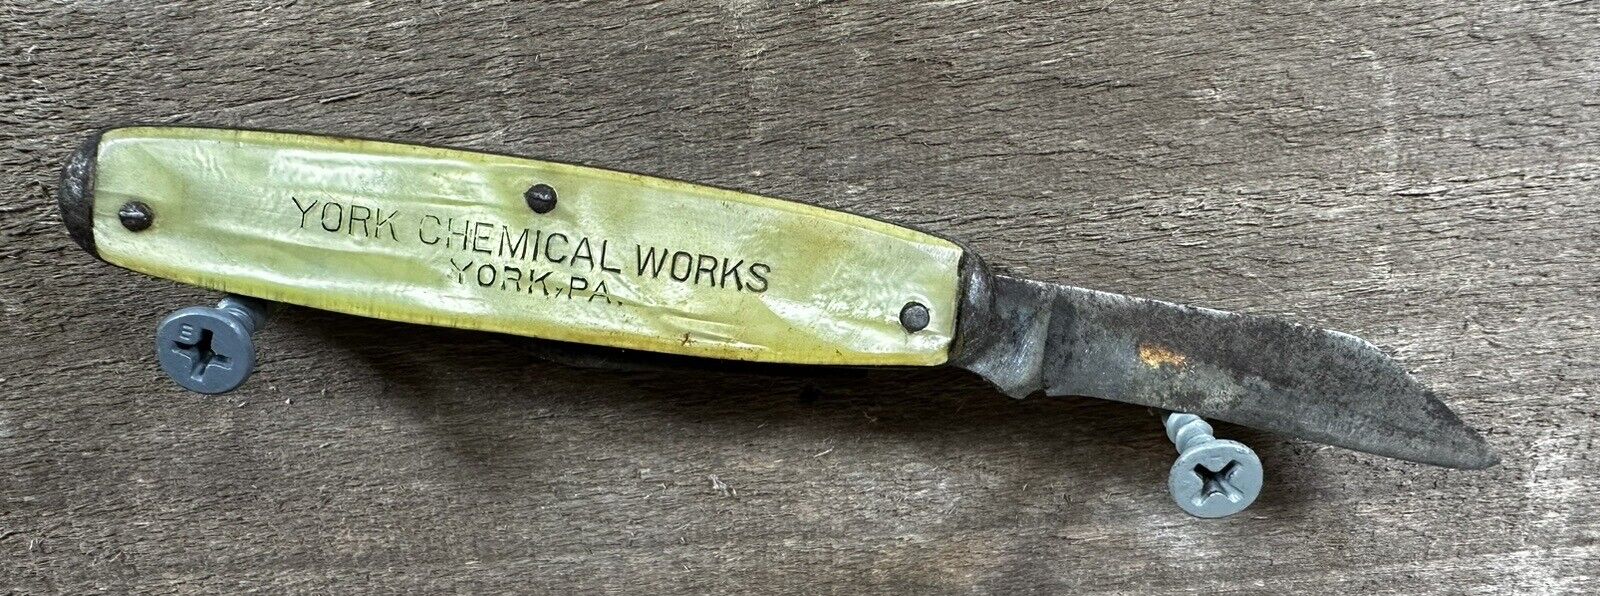 Dempwolf’s Fertilizers, YORK Chemical Works, Vintage UTICA Advertising Knife